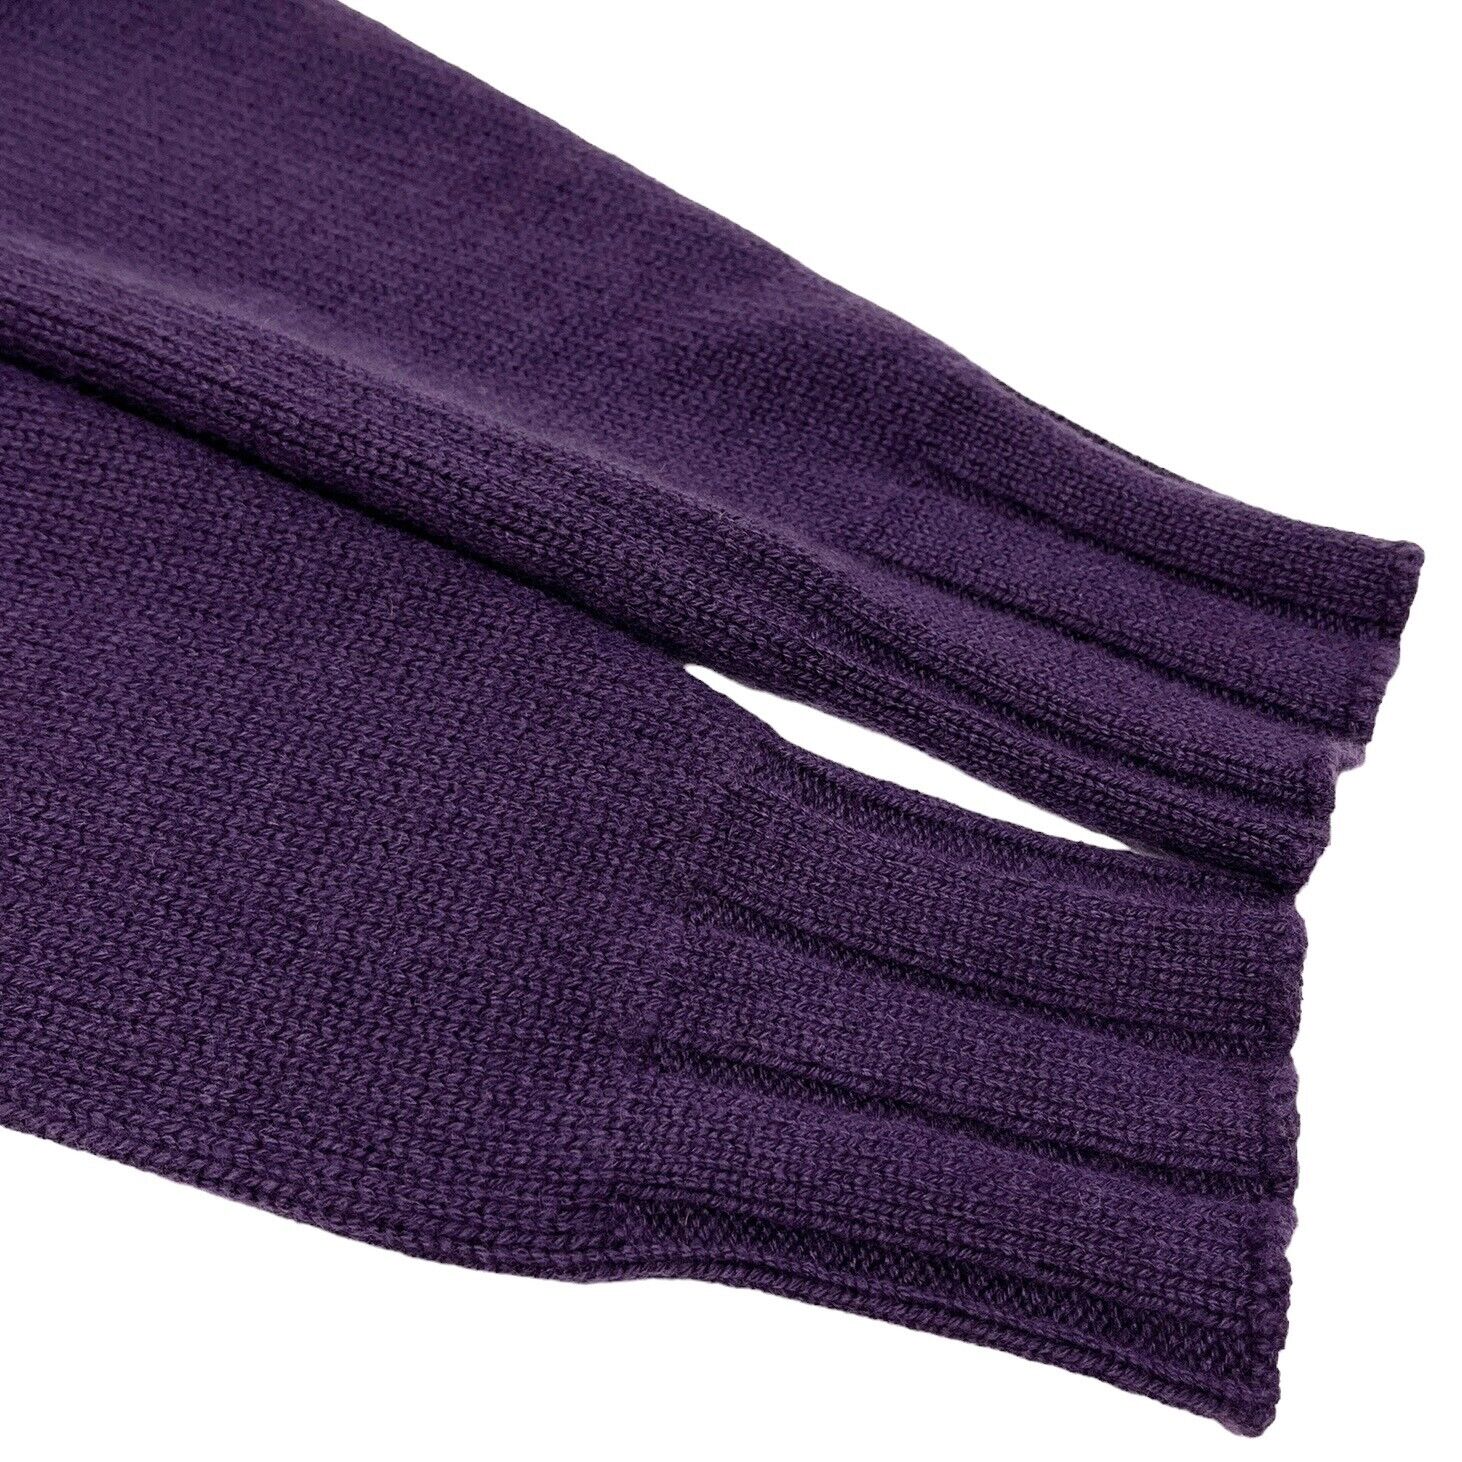 CHANEL Vintage P44576 CC Logo Sweater Top #34 Pullover Purple Cashmere RankAB